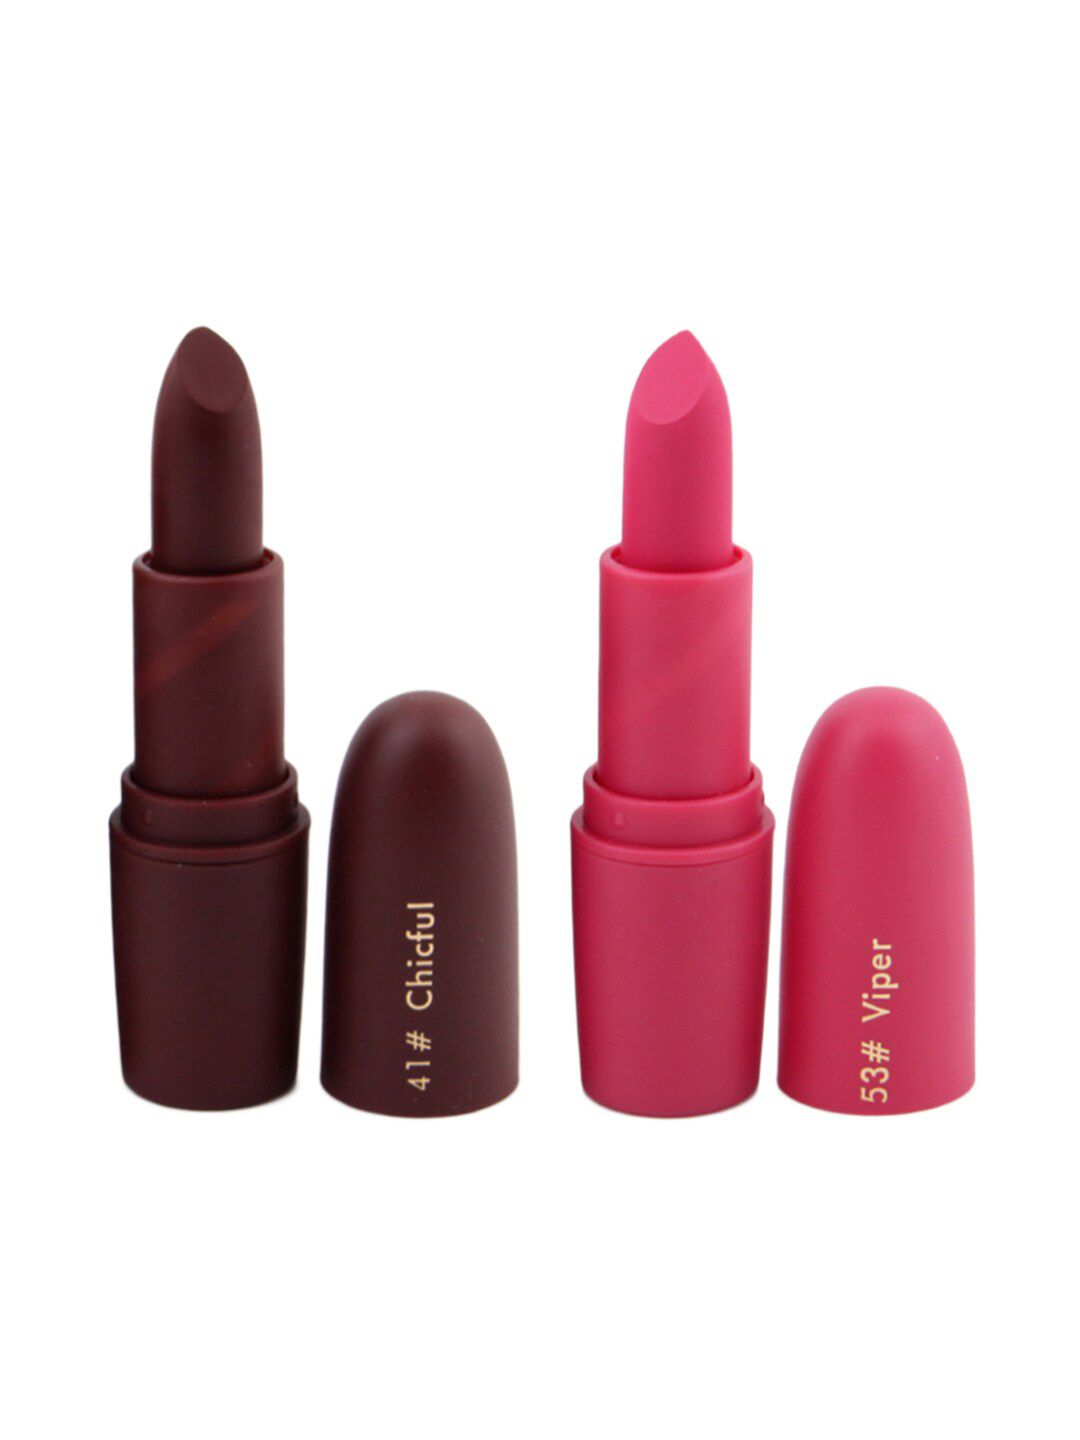 MISS ROSE Set of 2 Matte Creamy Lipsticks - Chicful 41 & Viper 53 Price in India